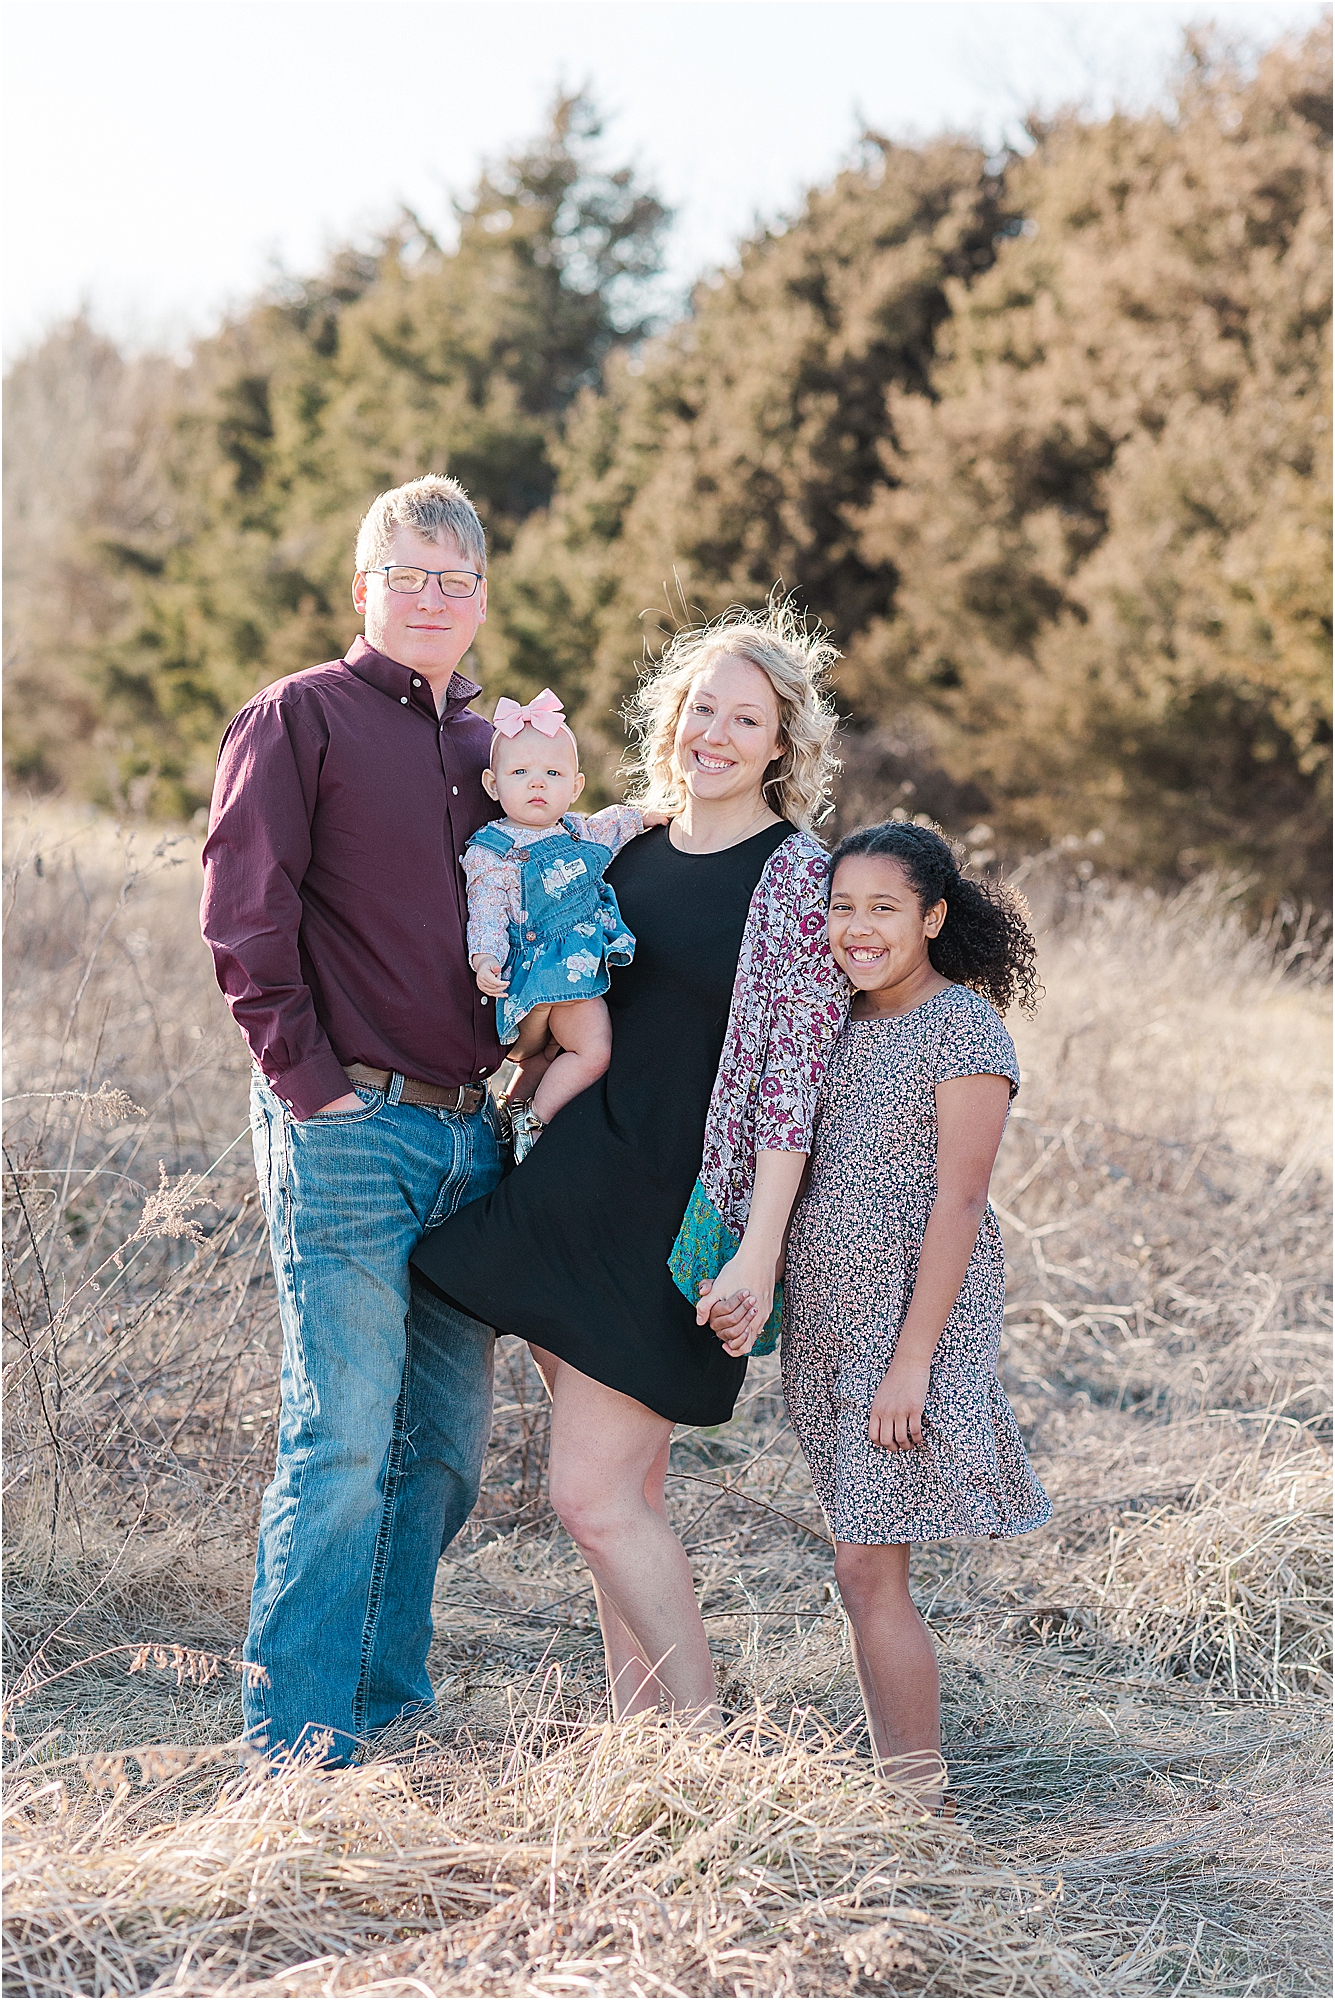 Munson Family | Maple Leaf Conservation Area family session | Kelsey Alumbaugh Photography | #kcfamilyphotos #familyphotography #familyphotoideas #missourifamilyphotos